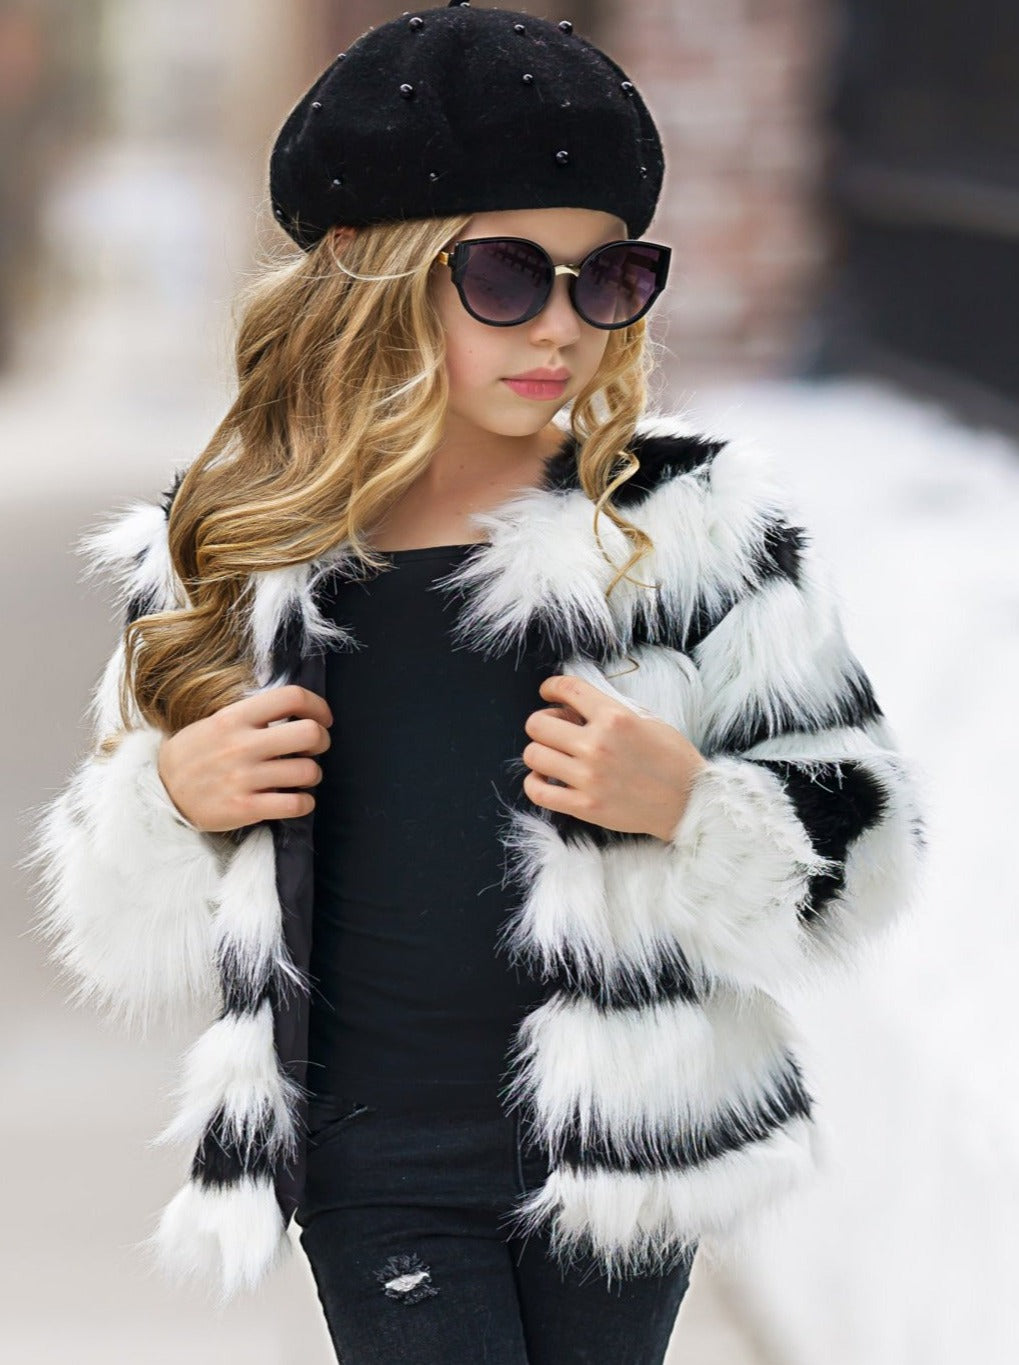 White Faux Fur Coats For Kids